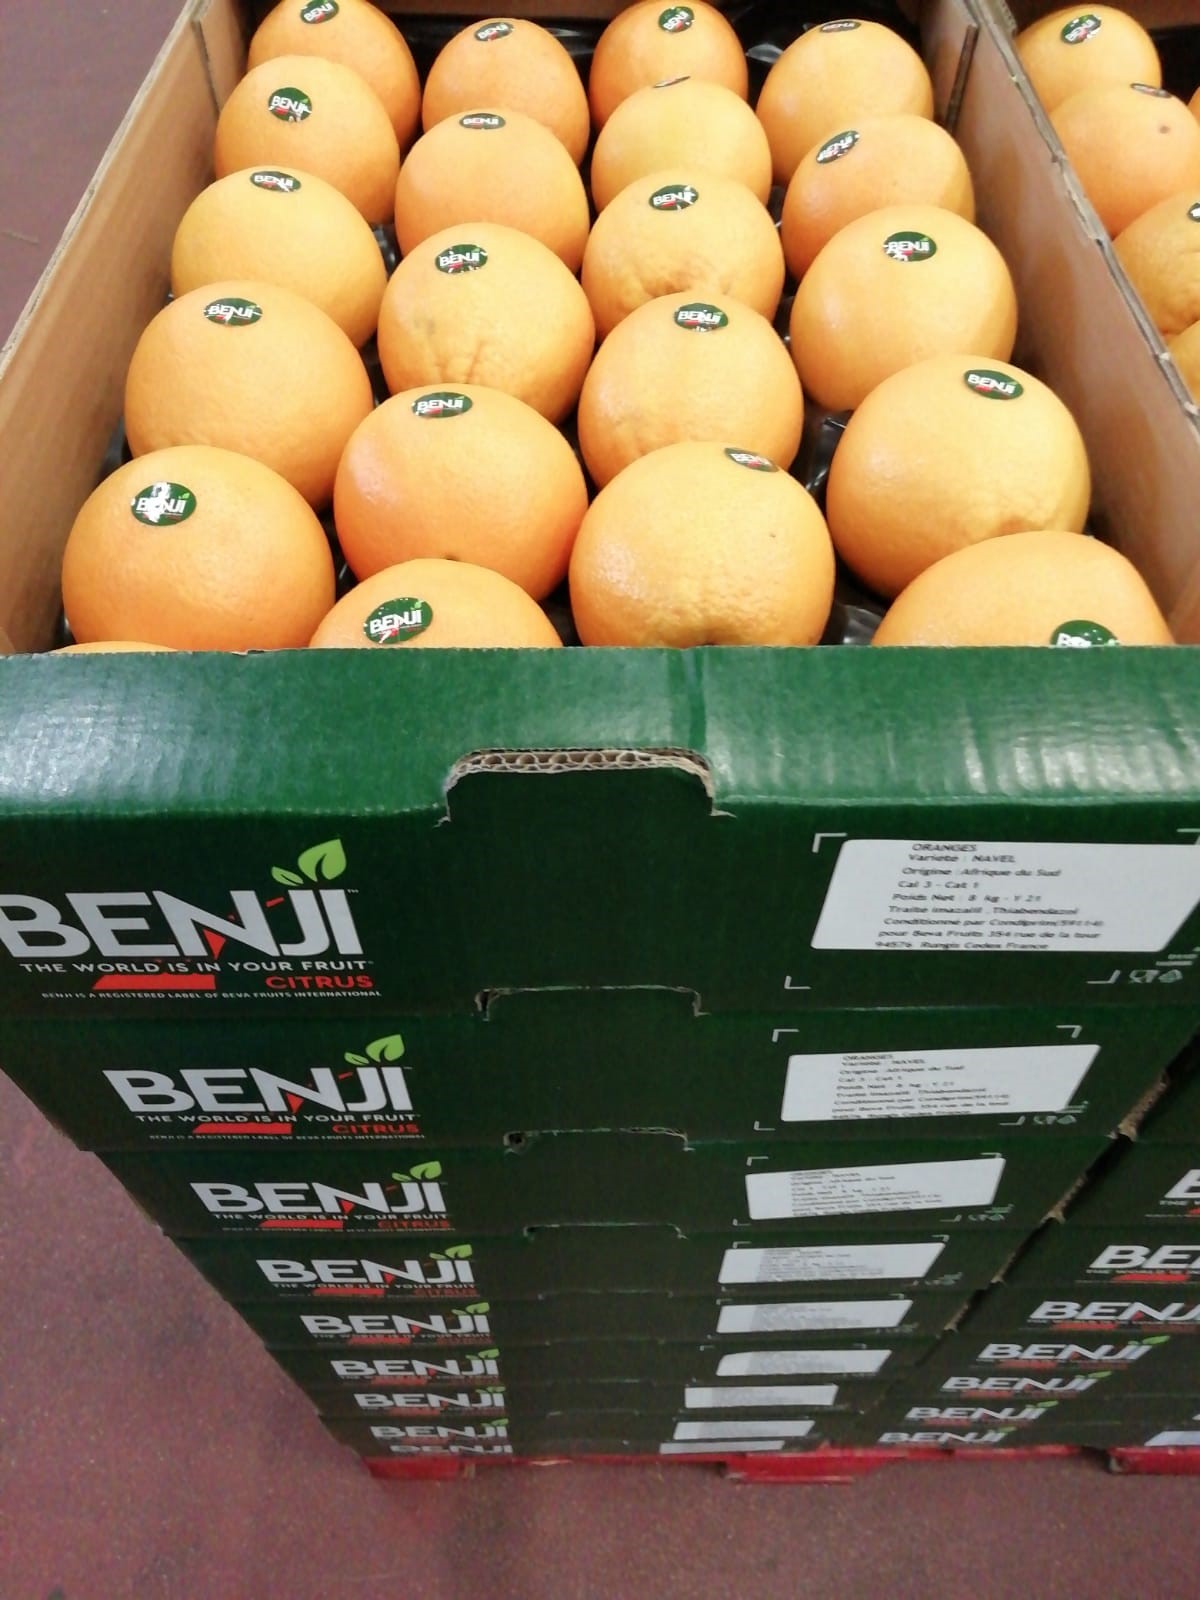 Grapefruit production in South Africa - Beva Fruits International (BFI)